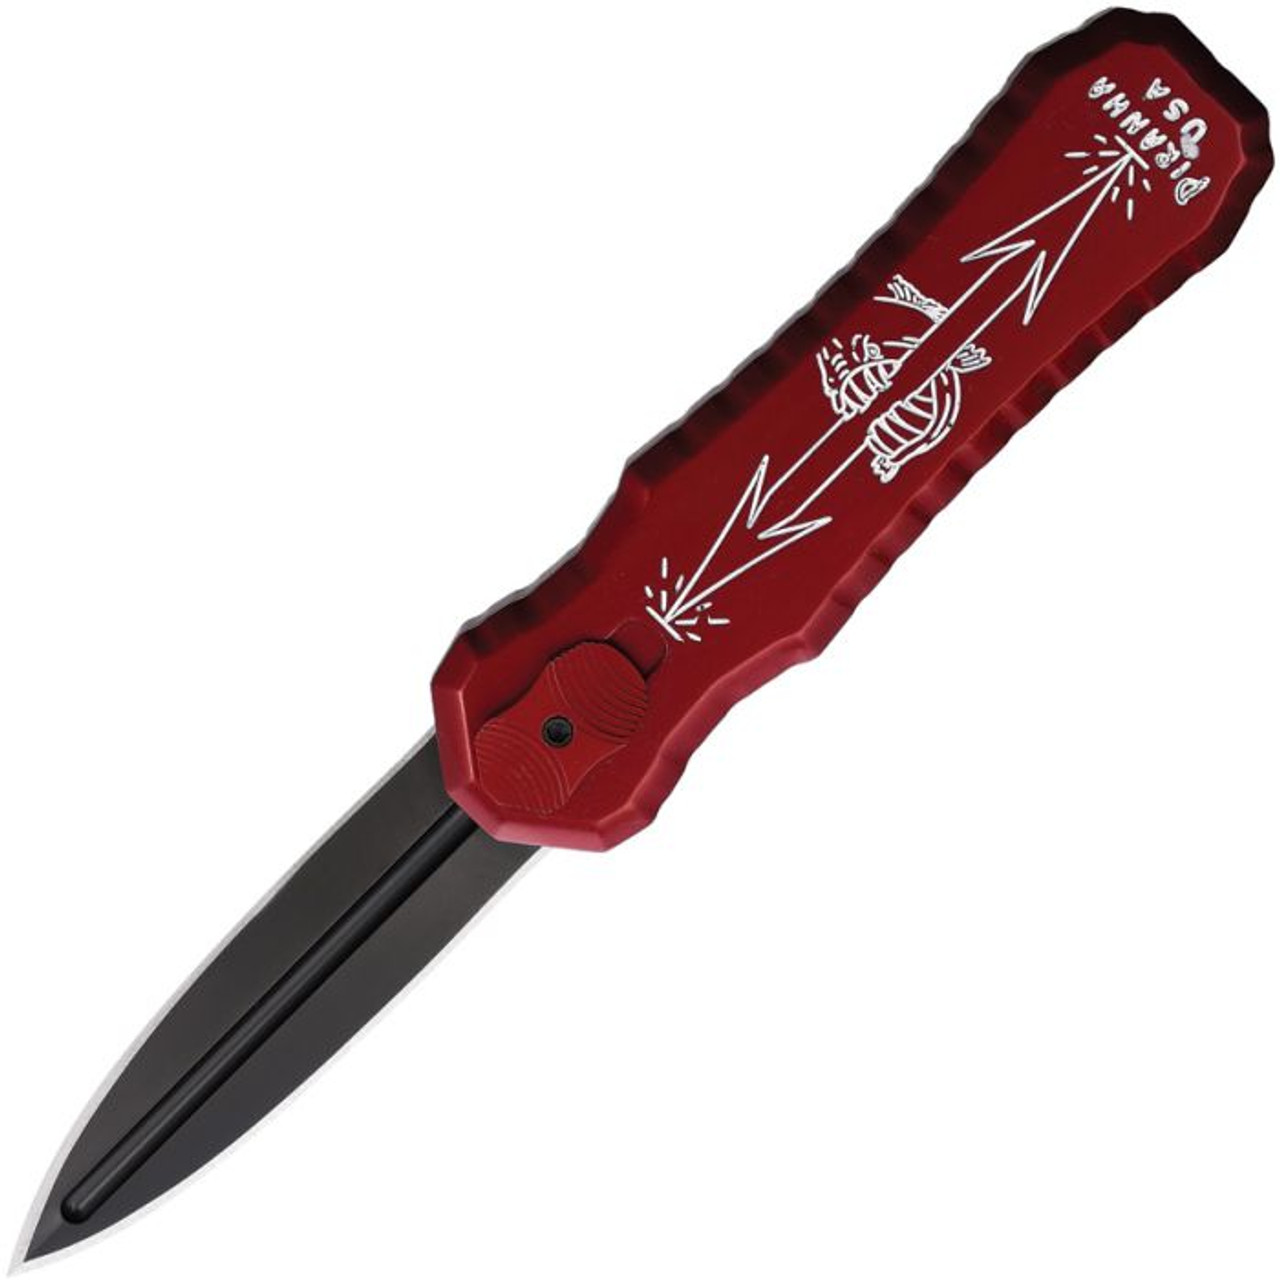 Piranha Excalibur OTF Automatic Knife (PKCP8RT) - 3.2" 154CM Black Dagger Style Blade, Red Aluminum Handle